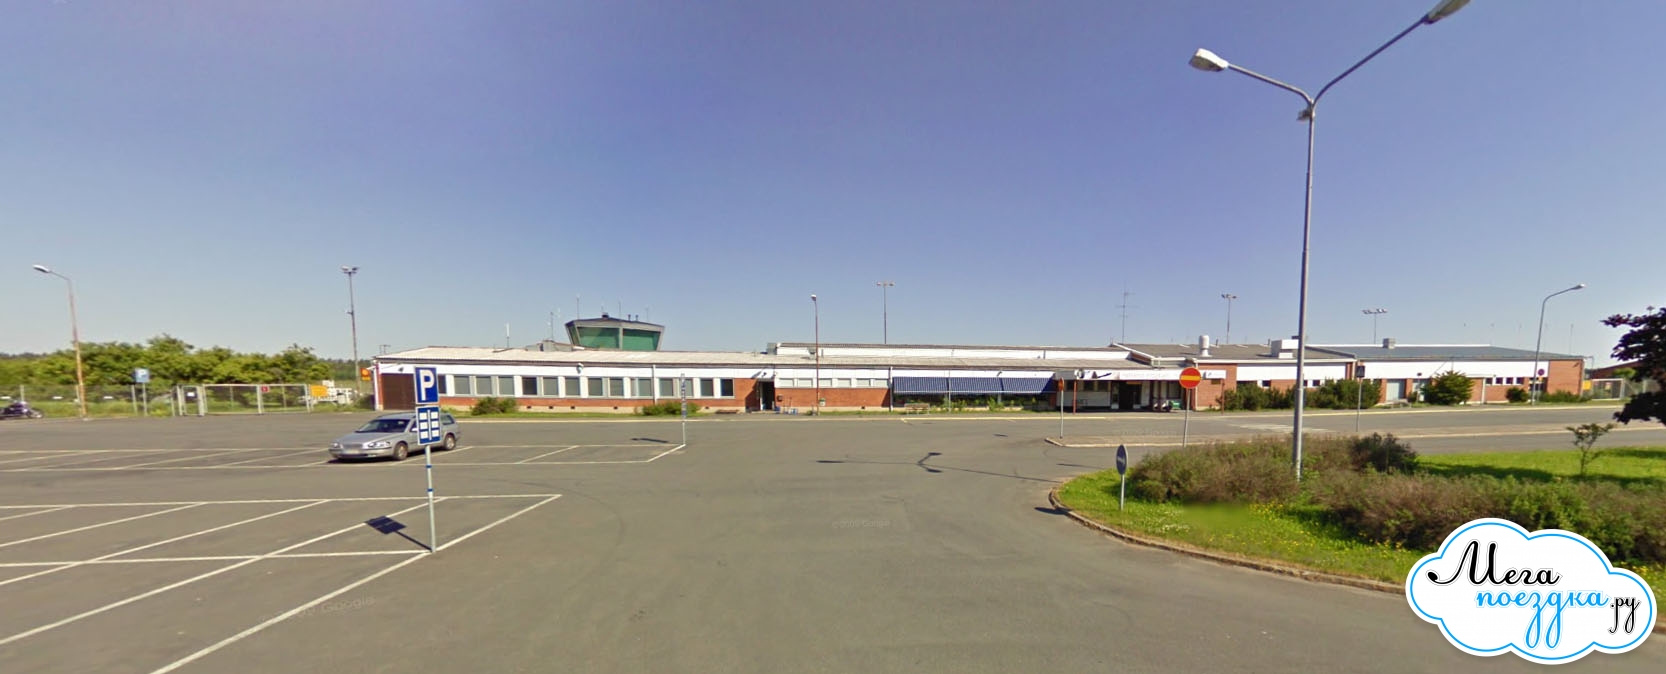 Аэропорт лаппеенранта — старейший аэропорт финляндии